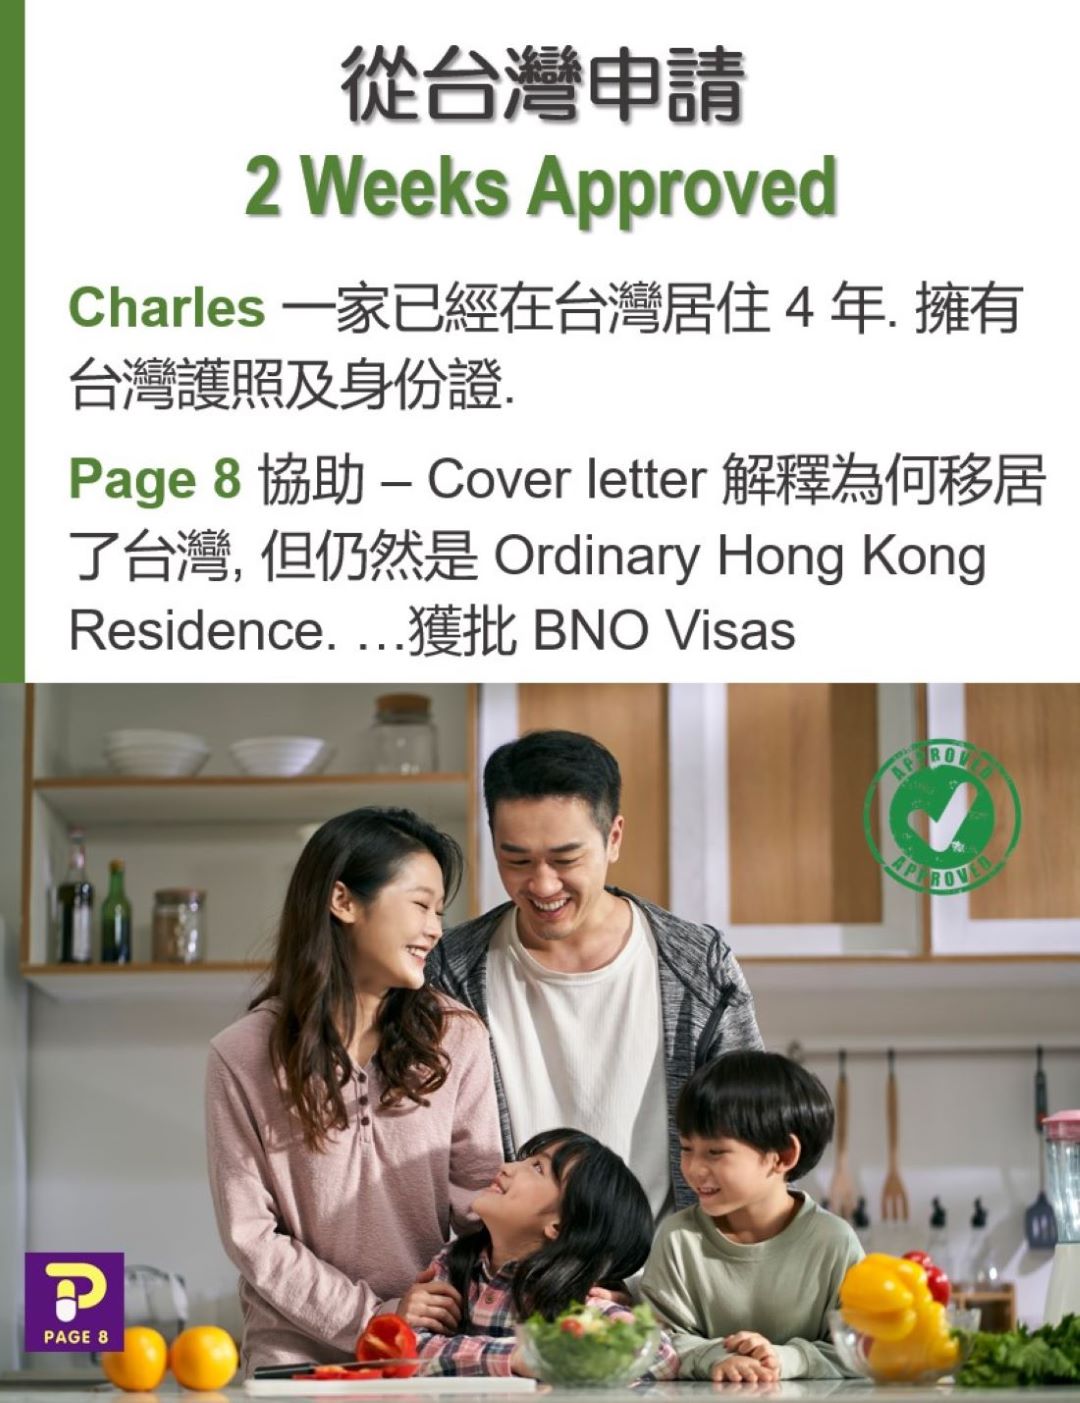 申請 BNO Visa「常見問題」FAQs  from Taiwan